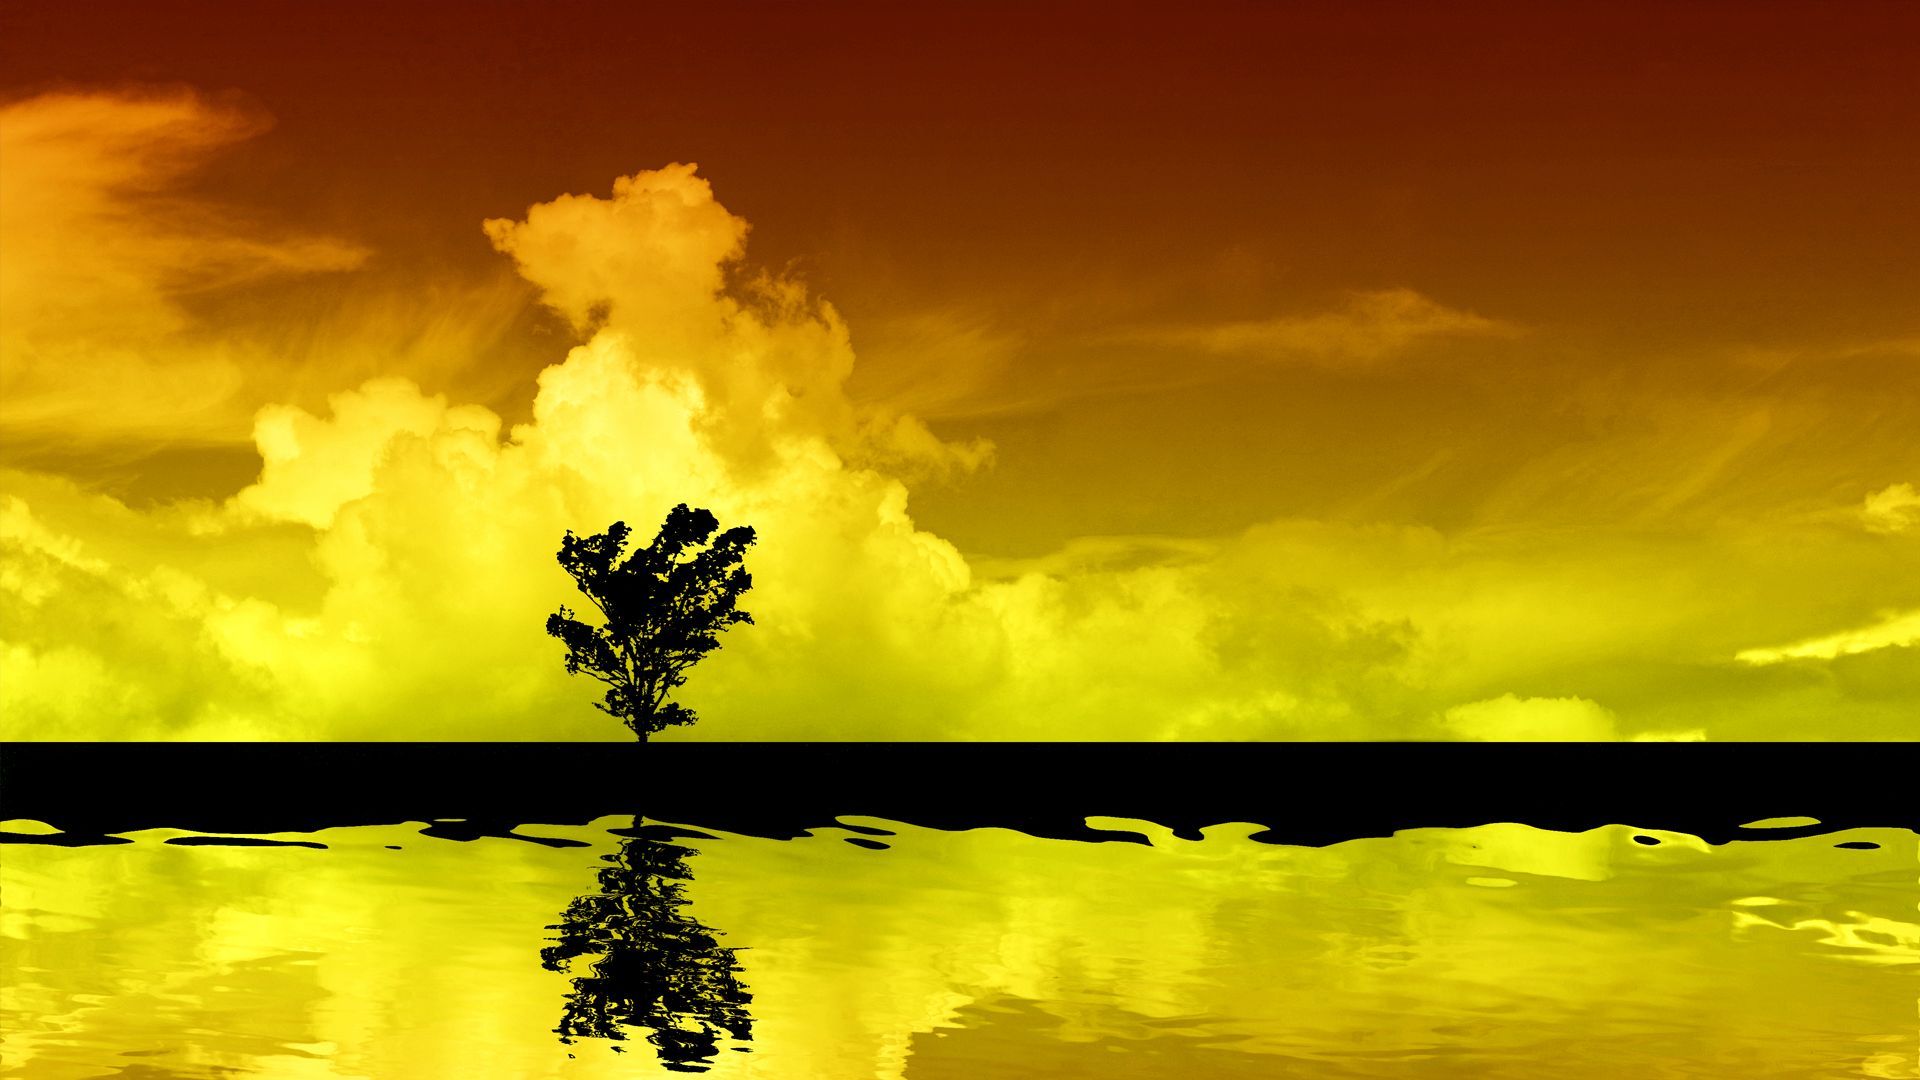 wallpaper hd 1080p free download,sky,natural landscape,nature,yellow,cloud